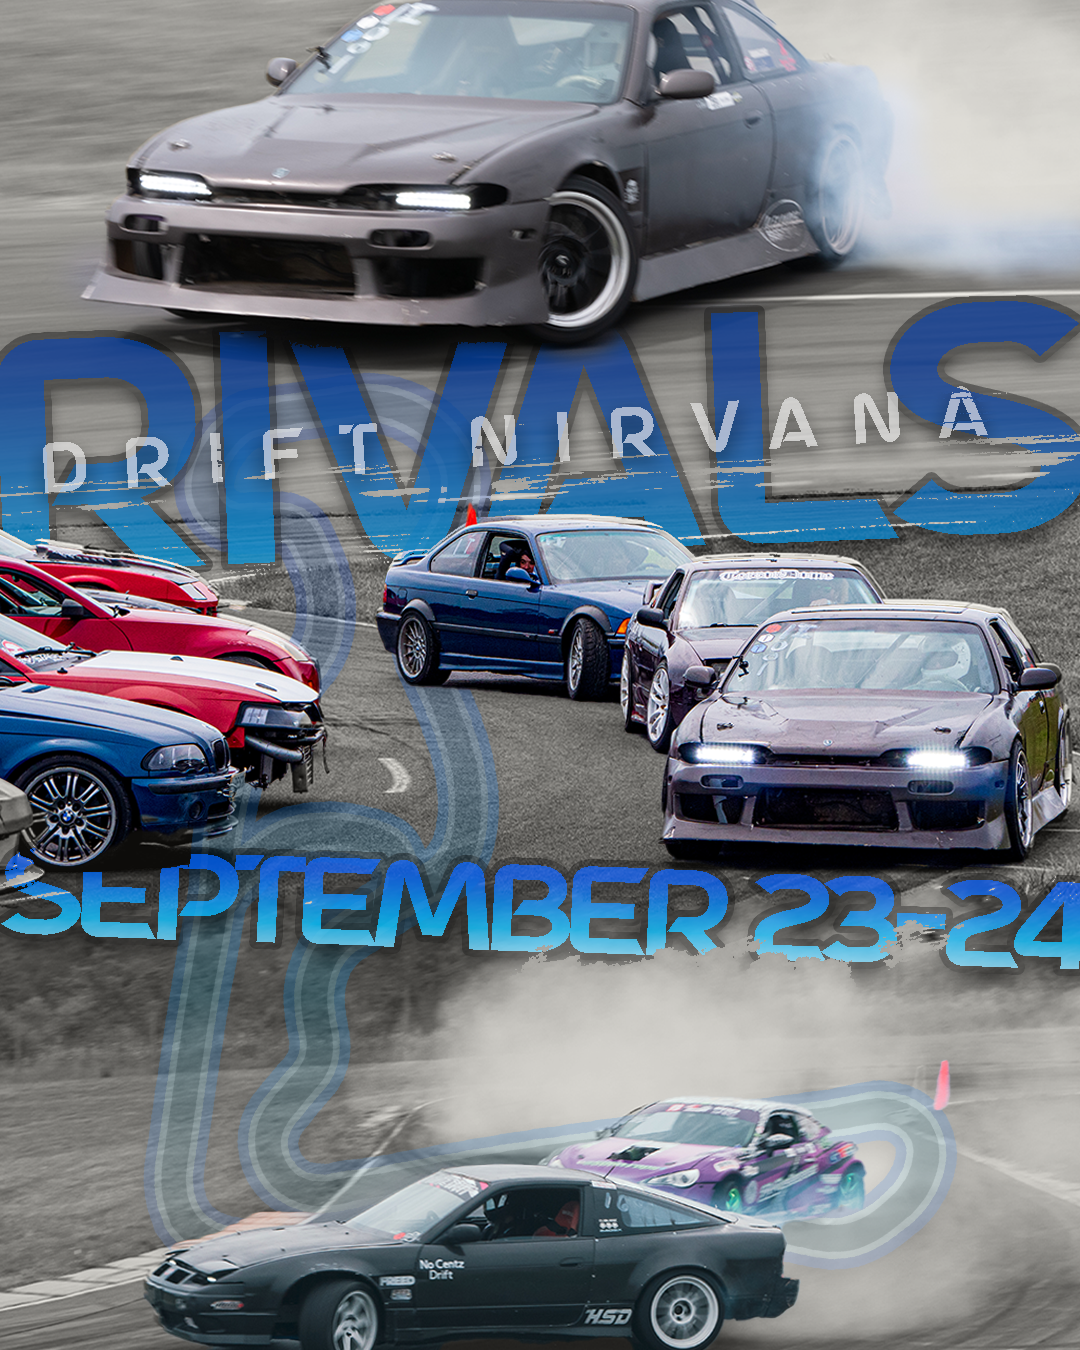 Drift Nirvana Drift Games - Summit Point Motorsports Park